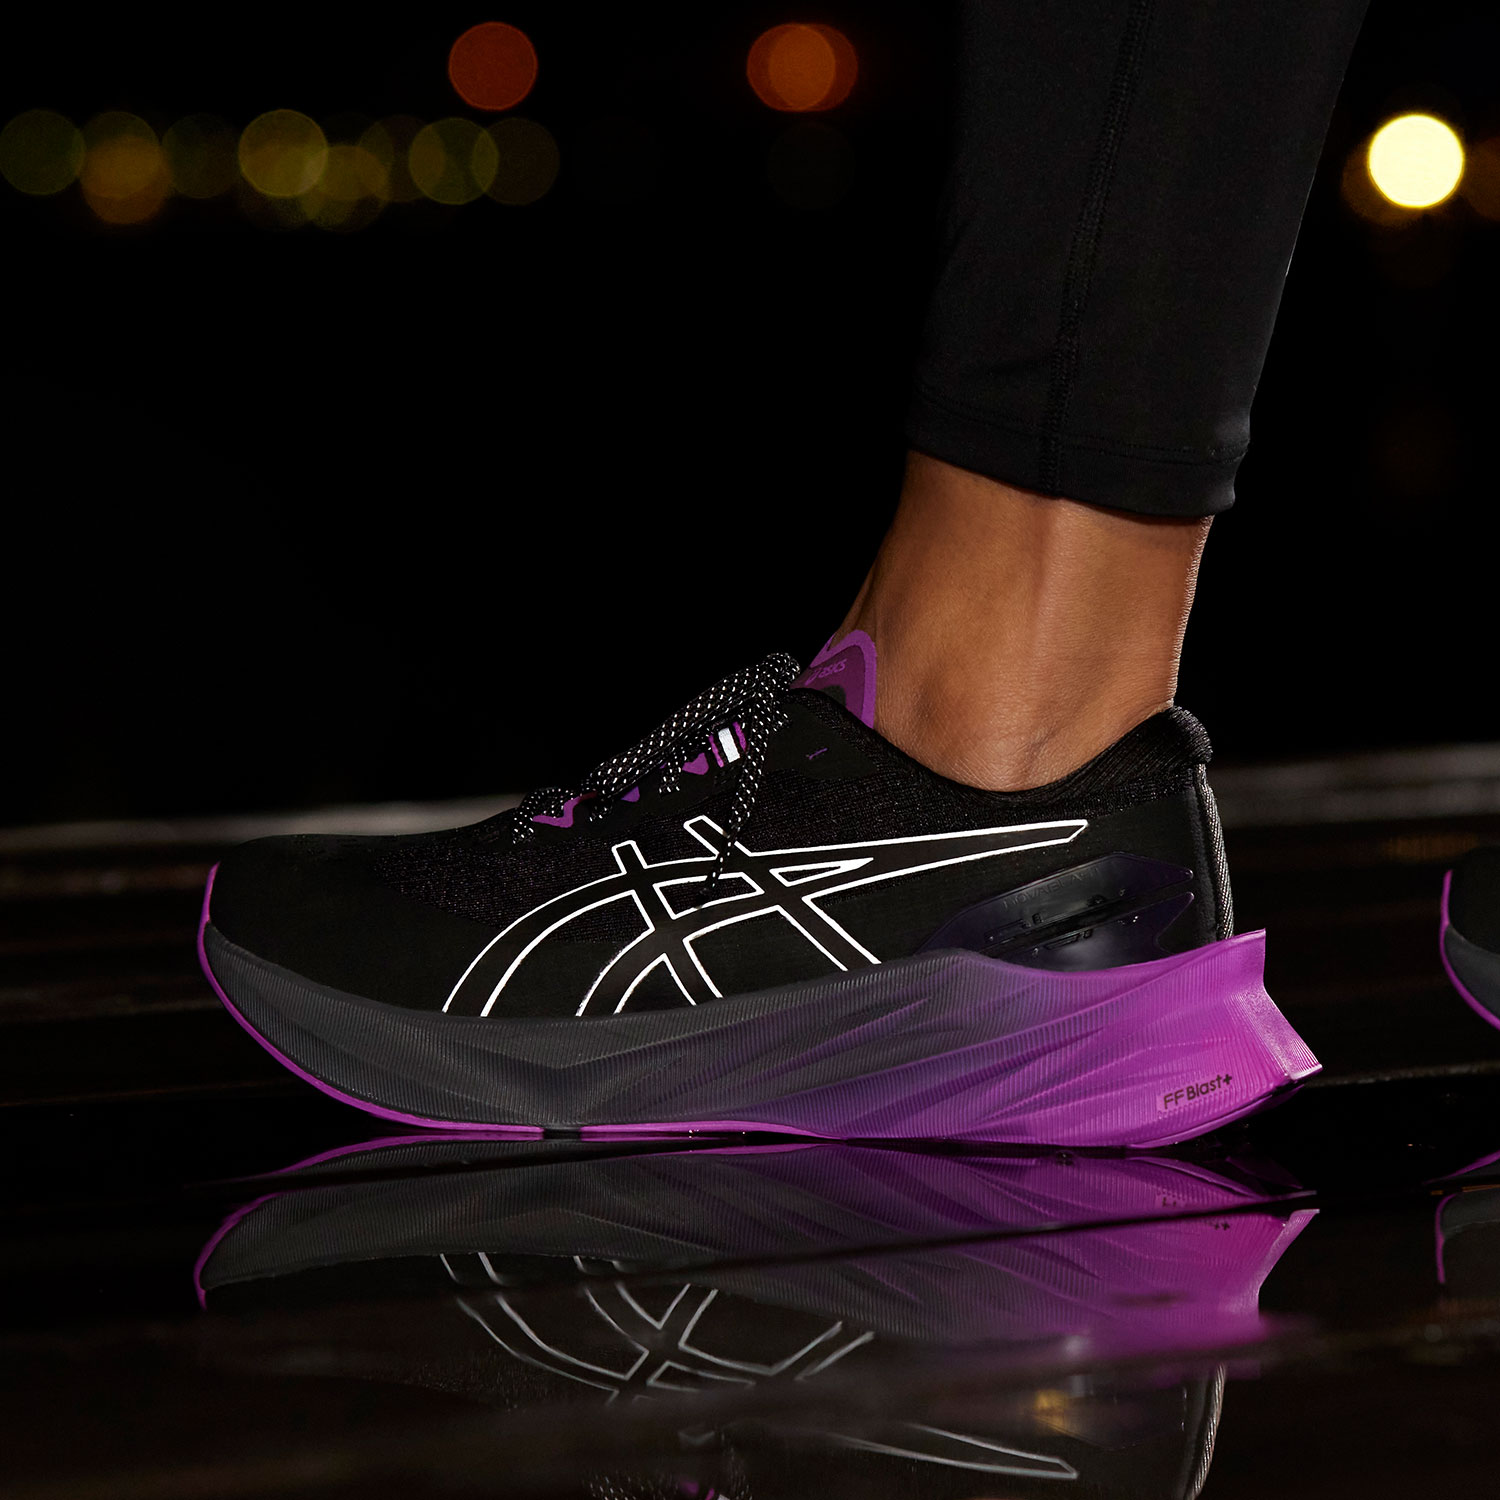 Asics Novablast 3 Lite Show Women's Running Shoes - Black/Orchid